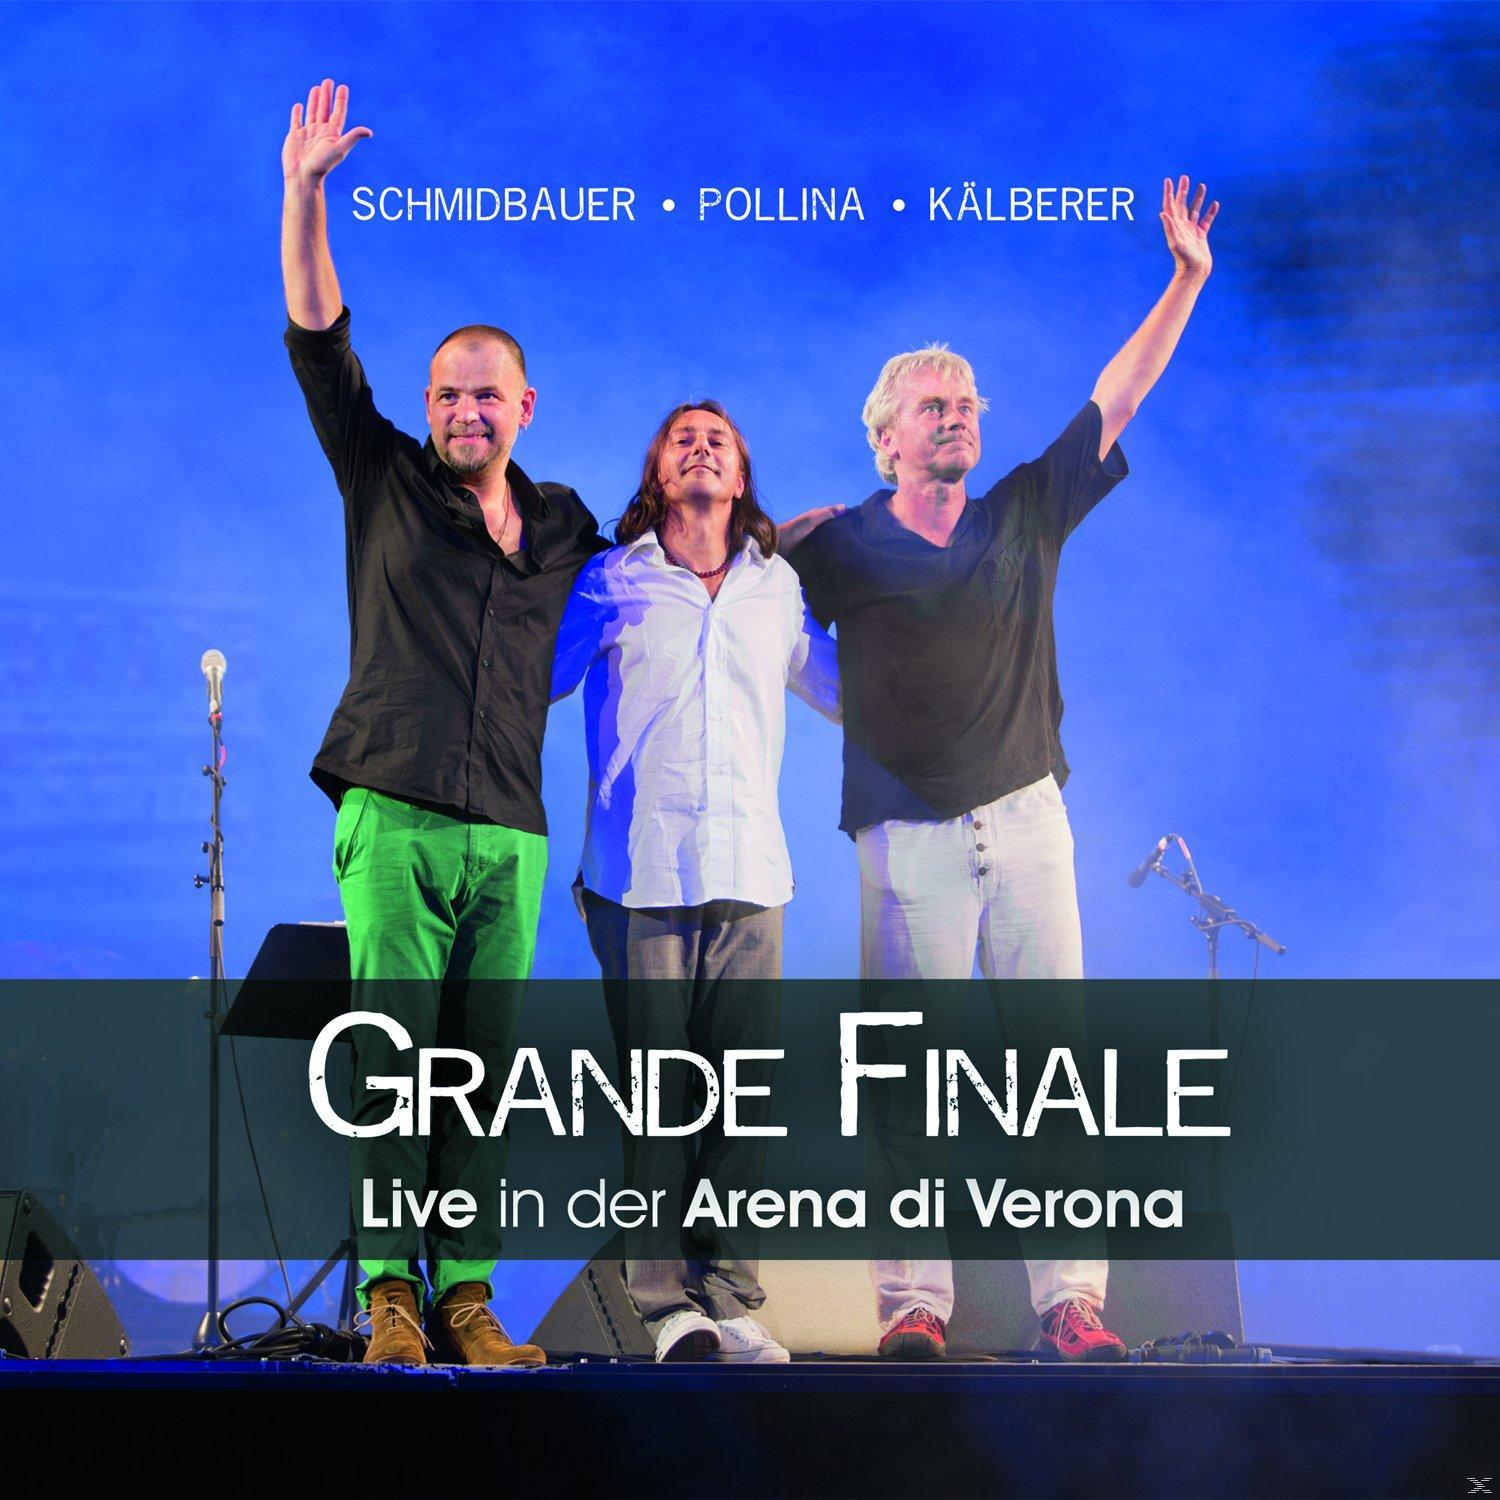 Pippo (DVD) Der Martin Grande Werner Pollina Verona Live In - Kälberer, Schmidbauer, - Arena Finale, Di